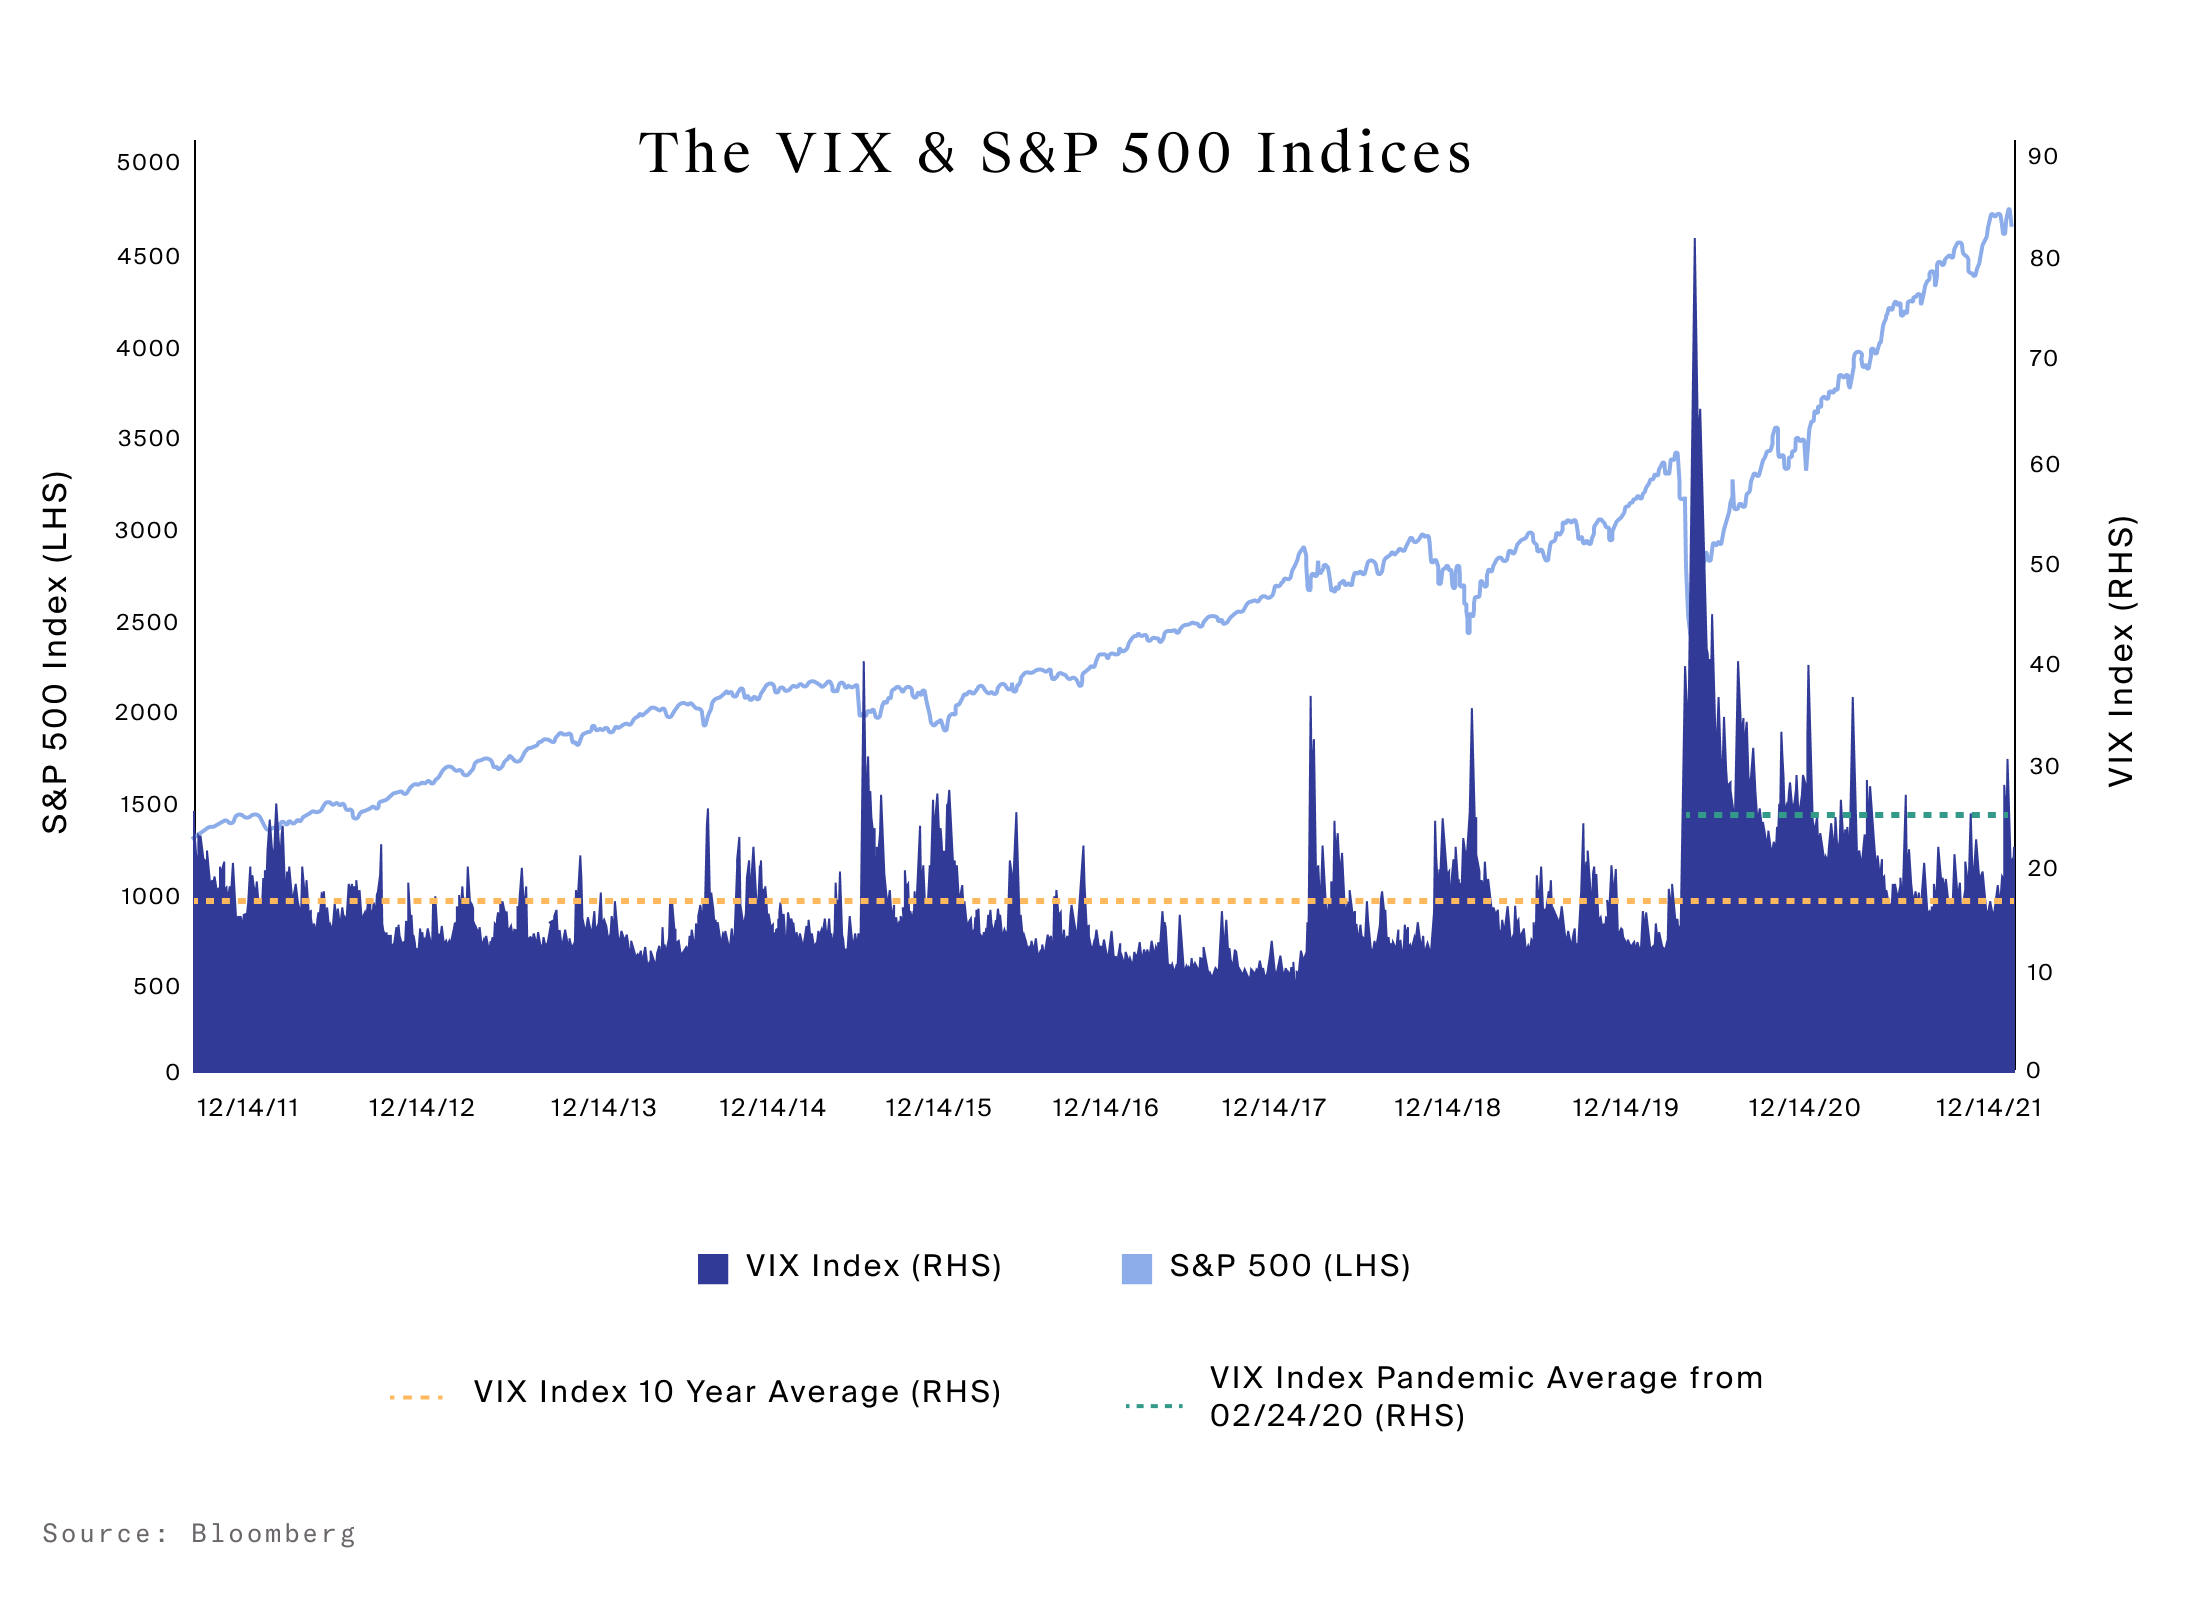 VIX Volatility_Image1.png